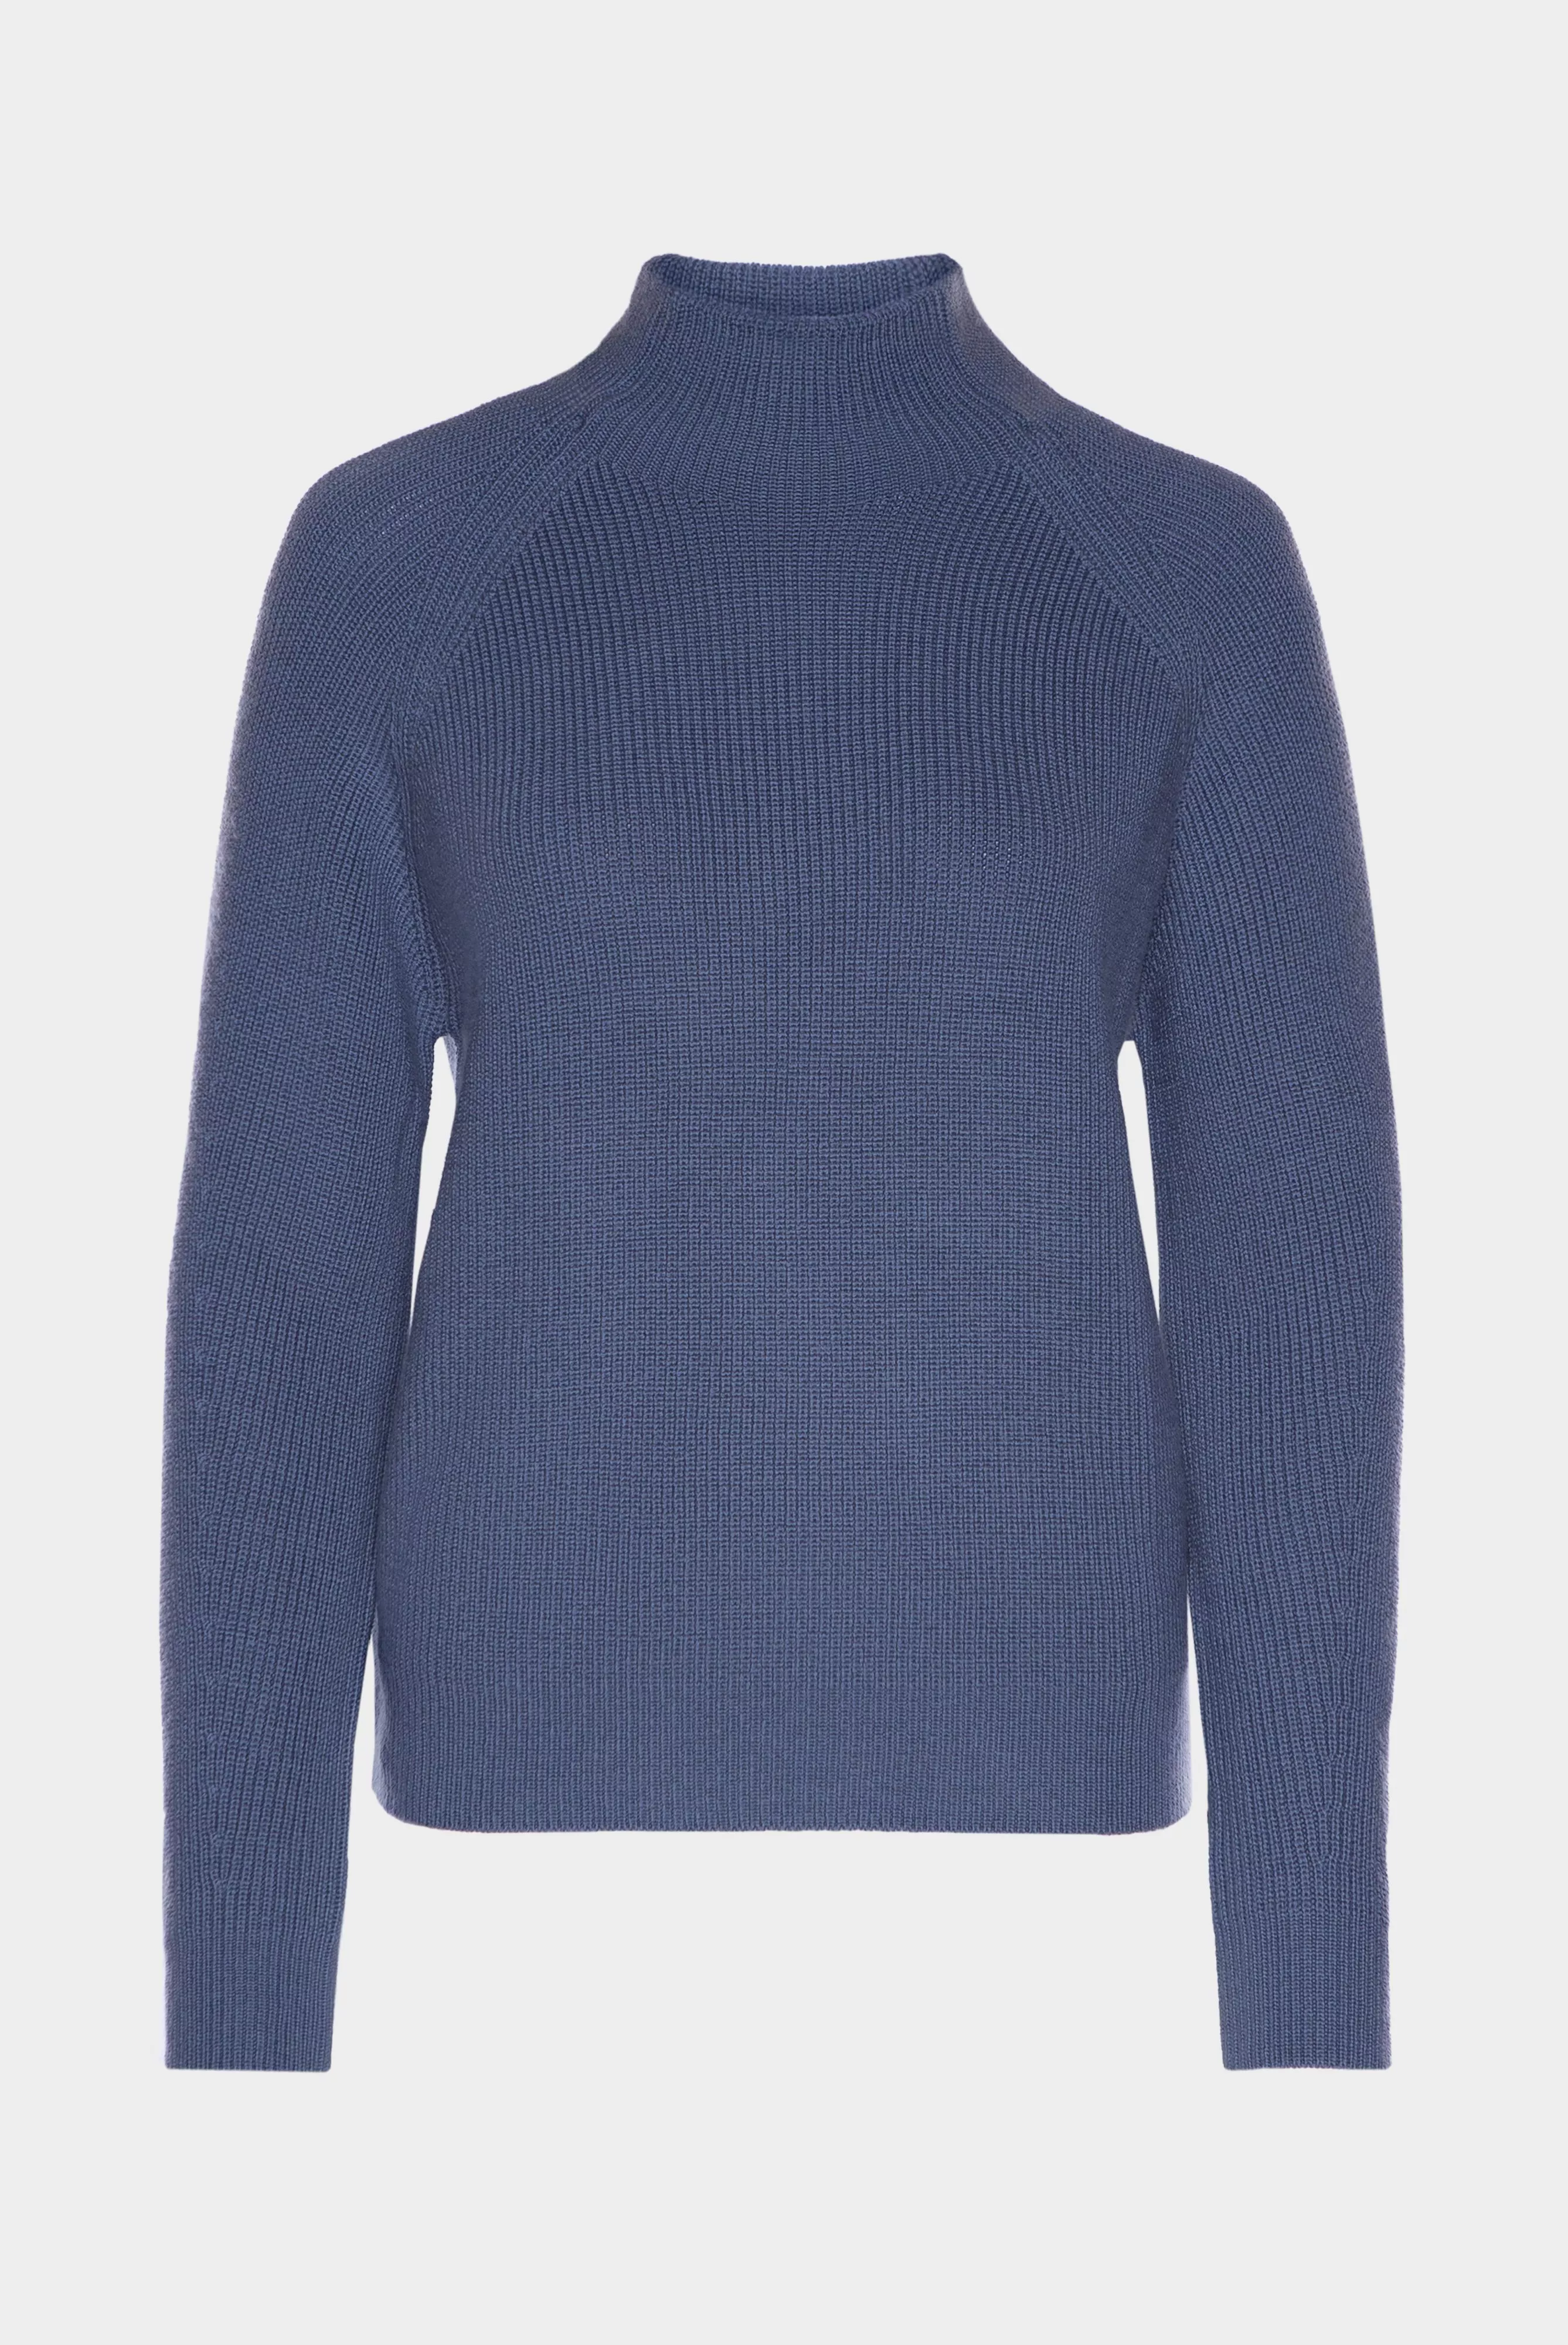 пуловер SULLY синий SULLY_S00220_770 ,photo 1